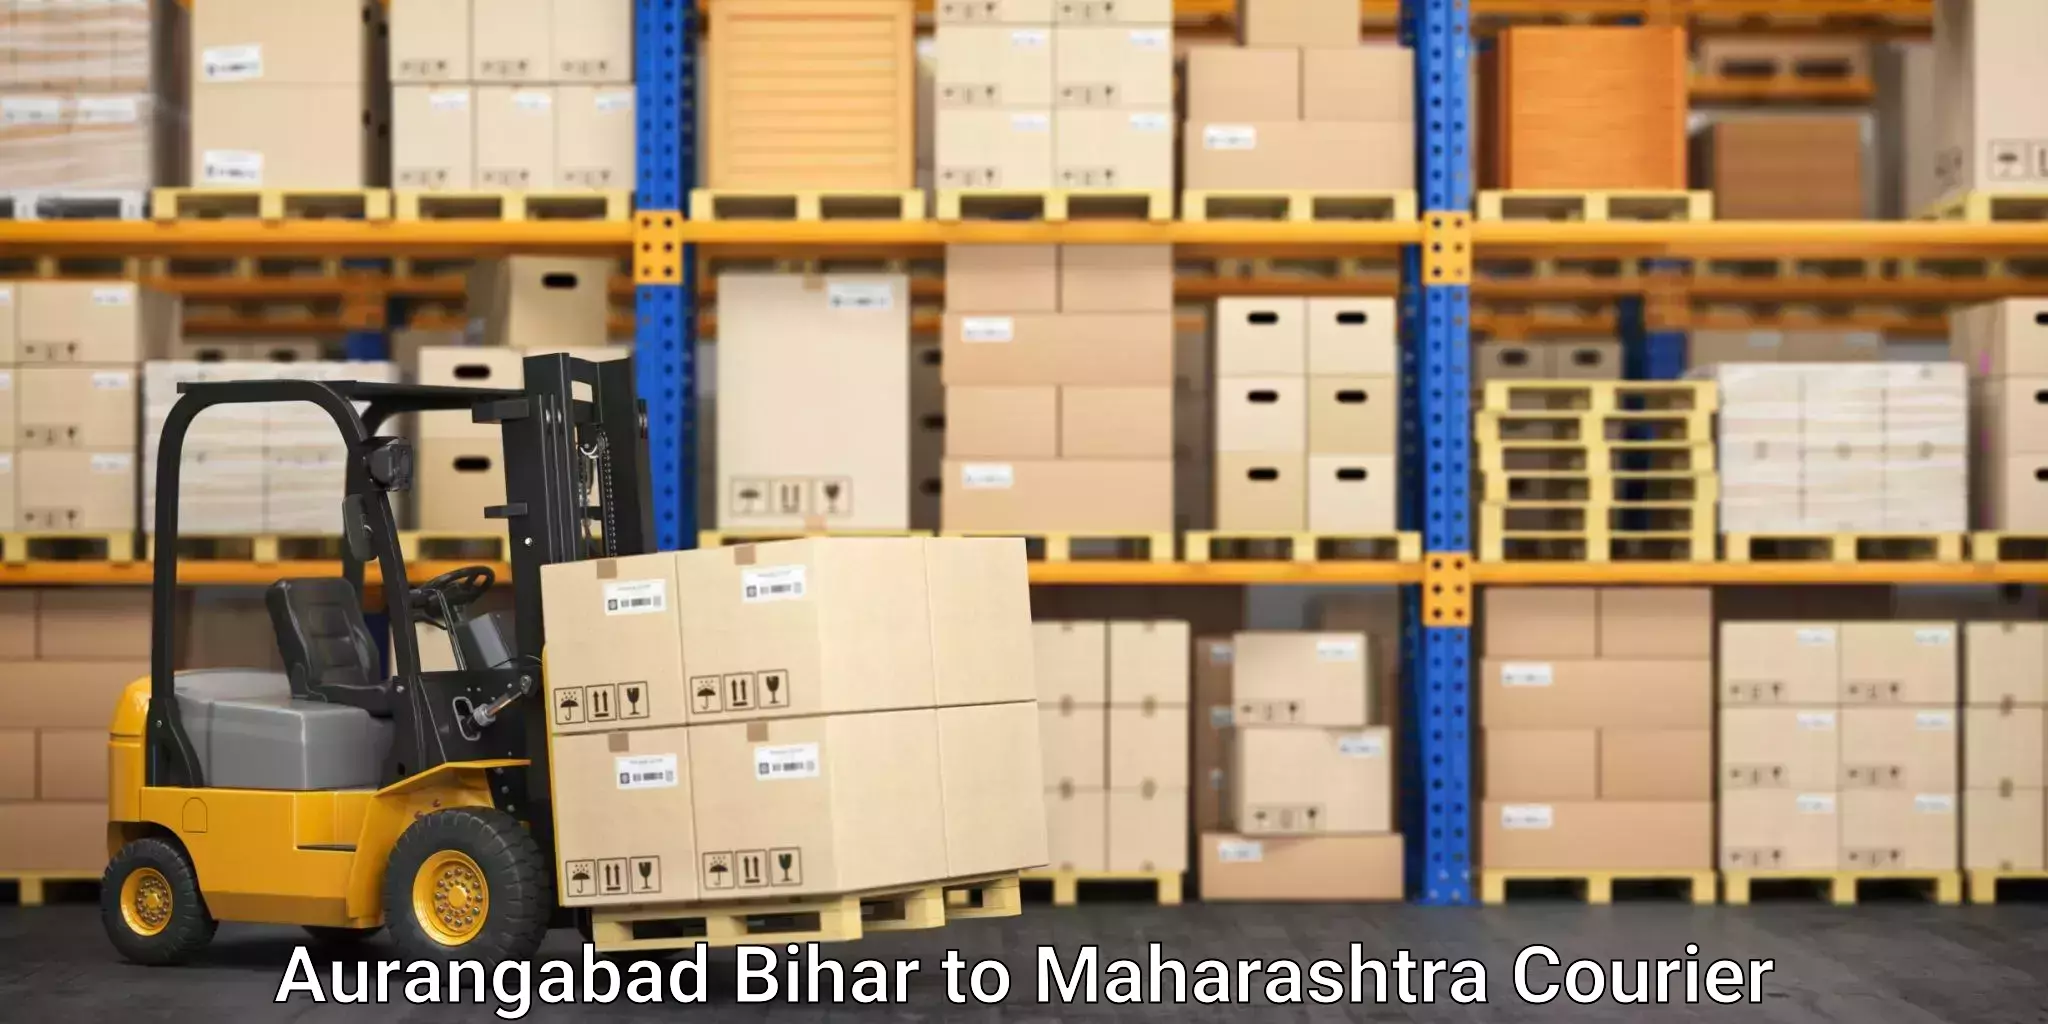 Advanced household movers Aurangabad Bihar to Nashik